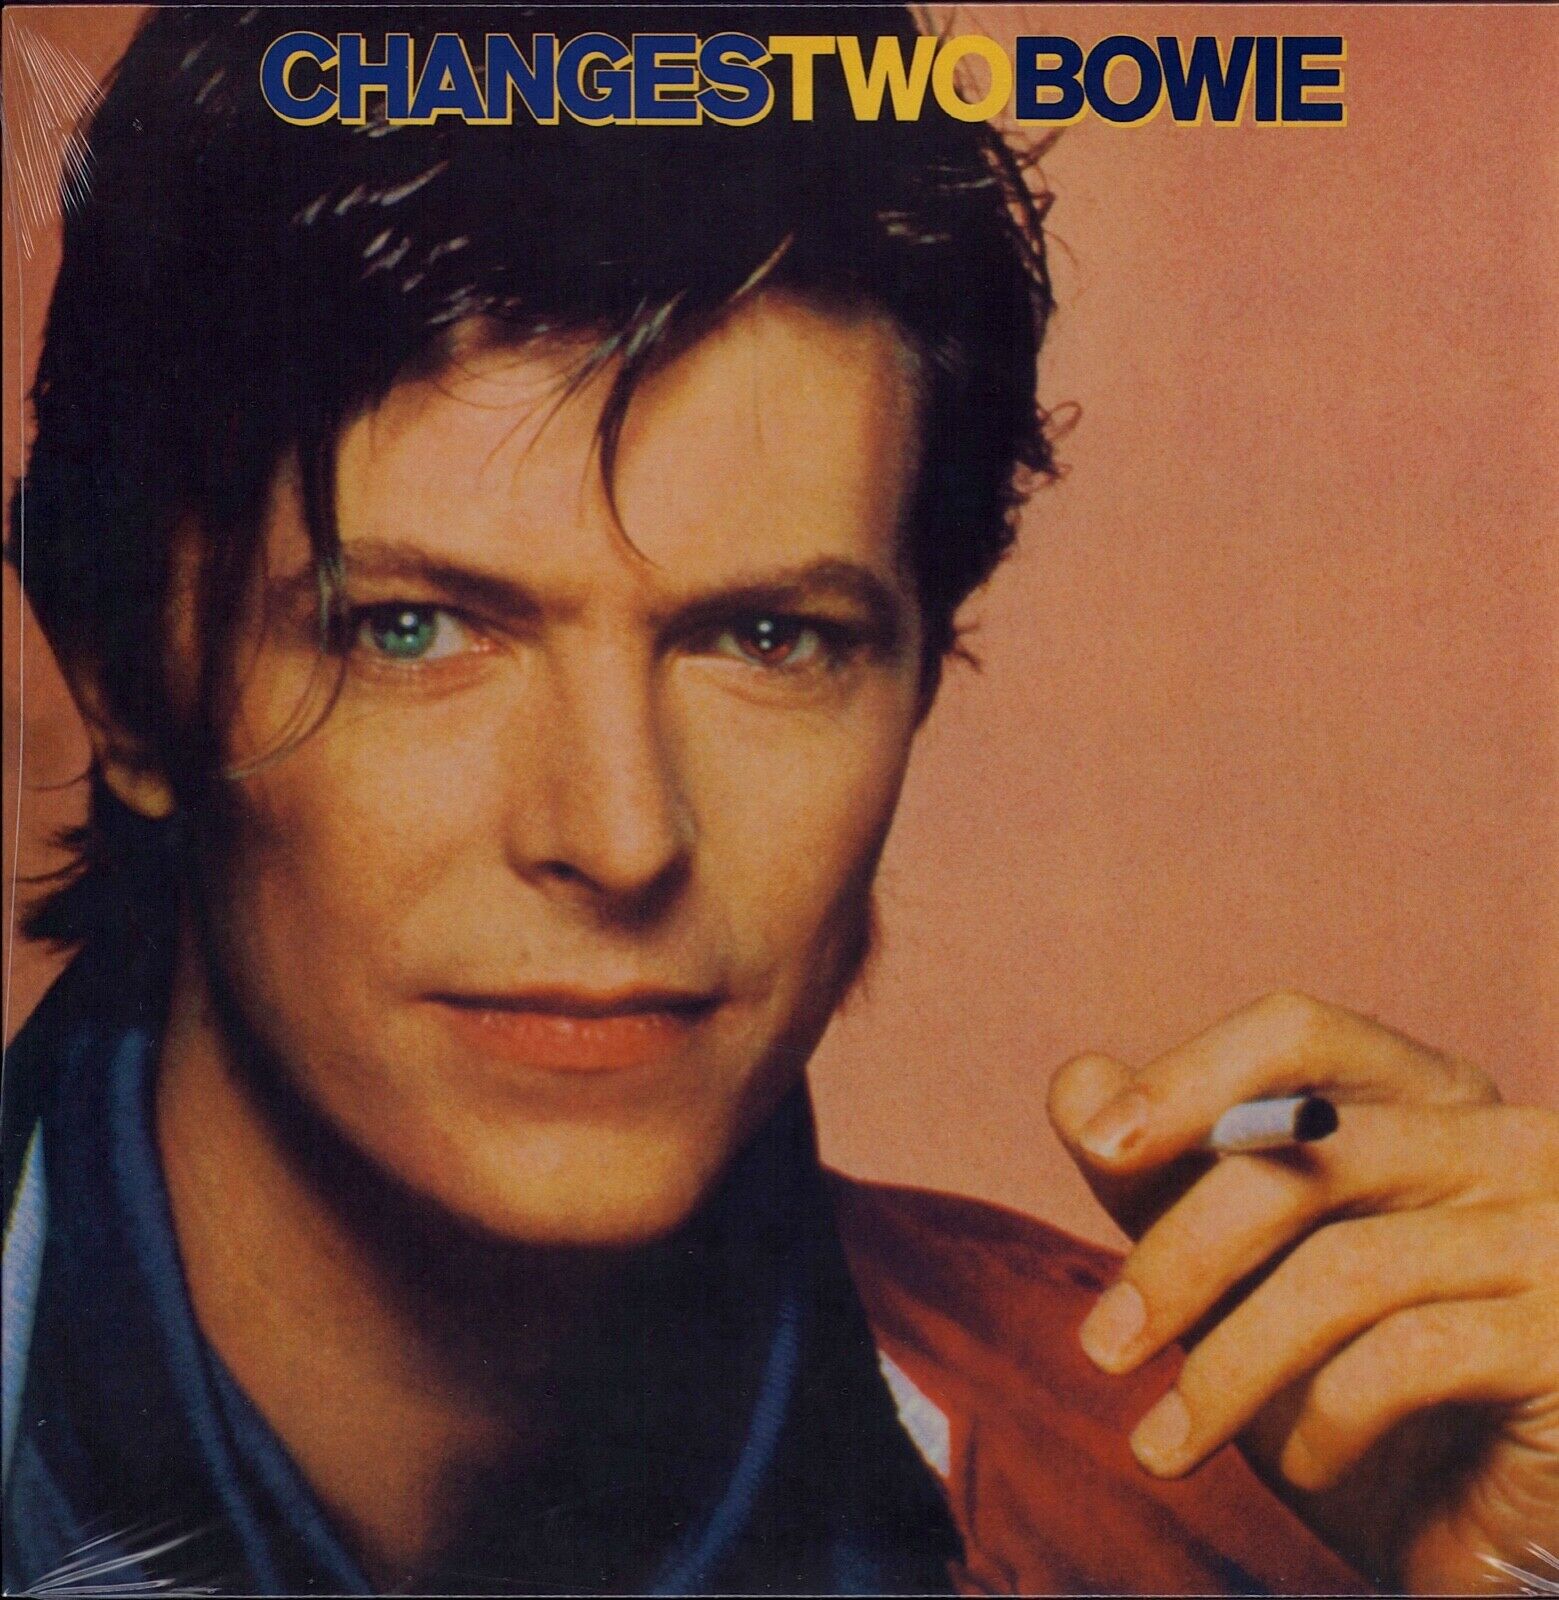 David Bowie ‎- ChangesTwoBowie Blue Transparent Vinyl LP Limited Editioin